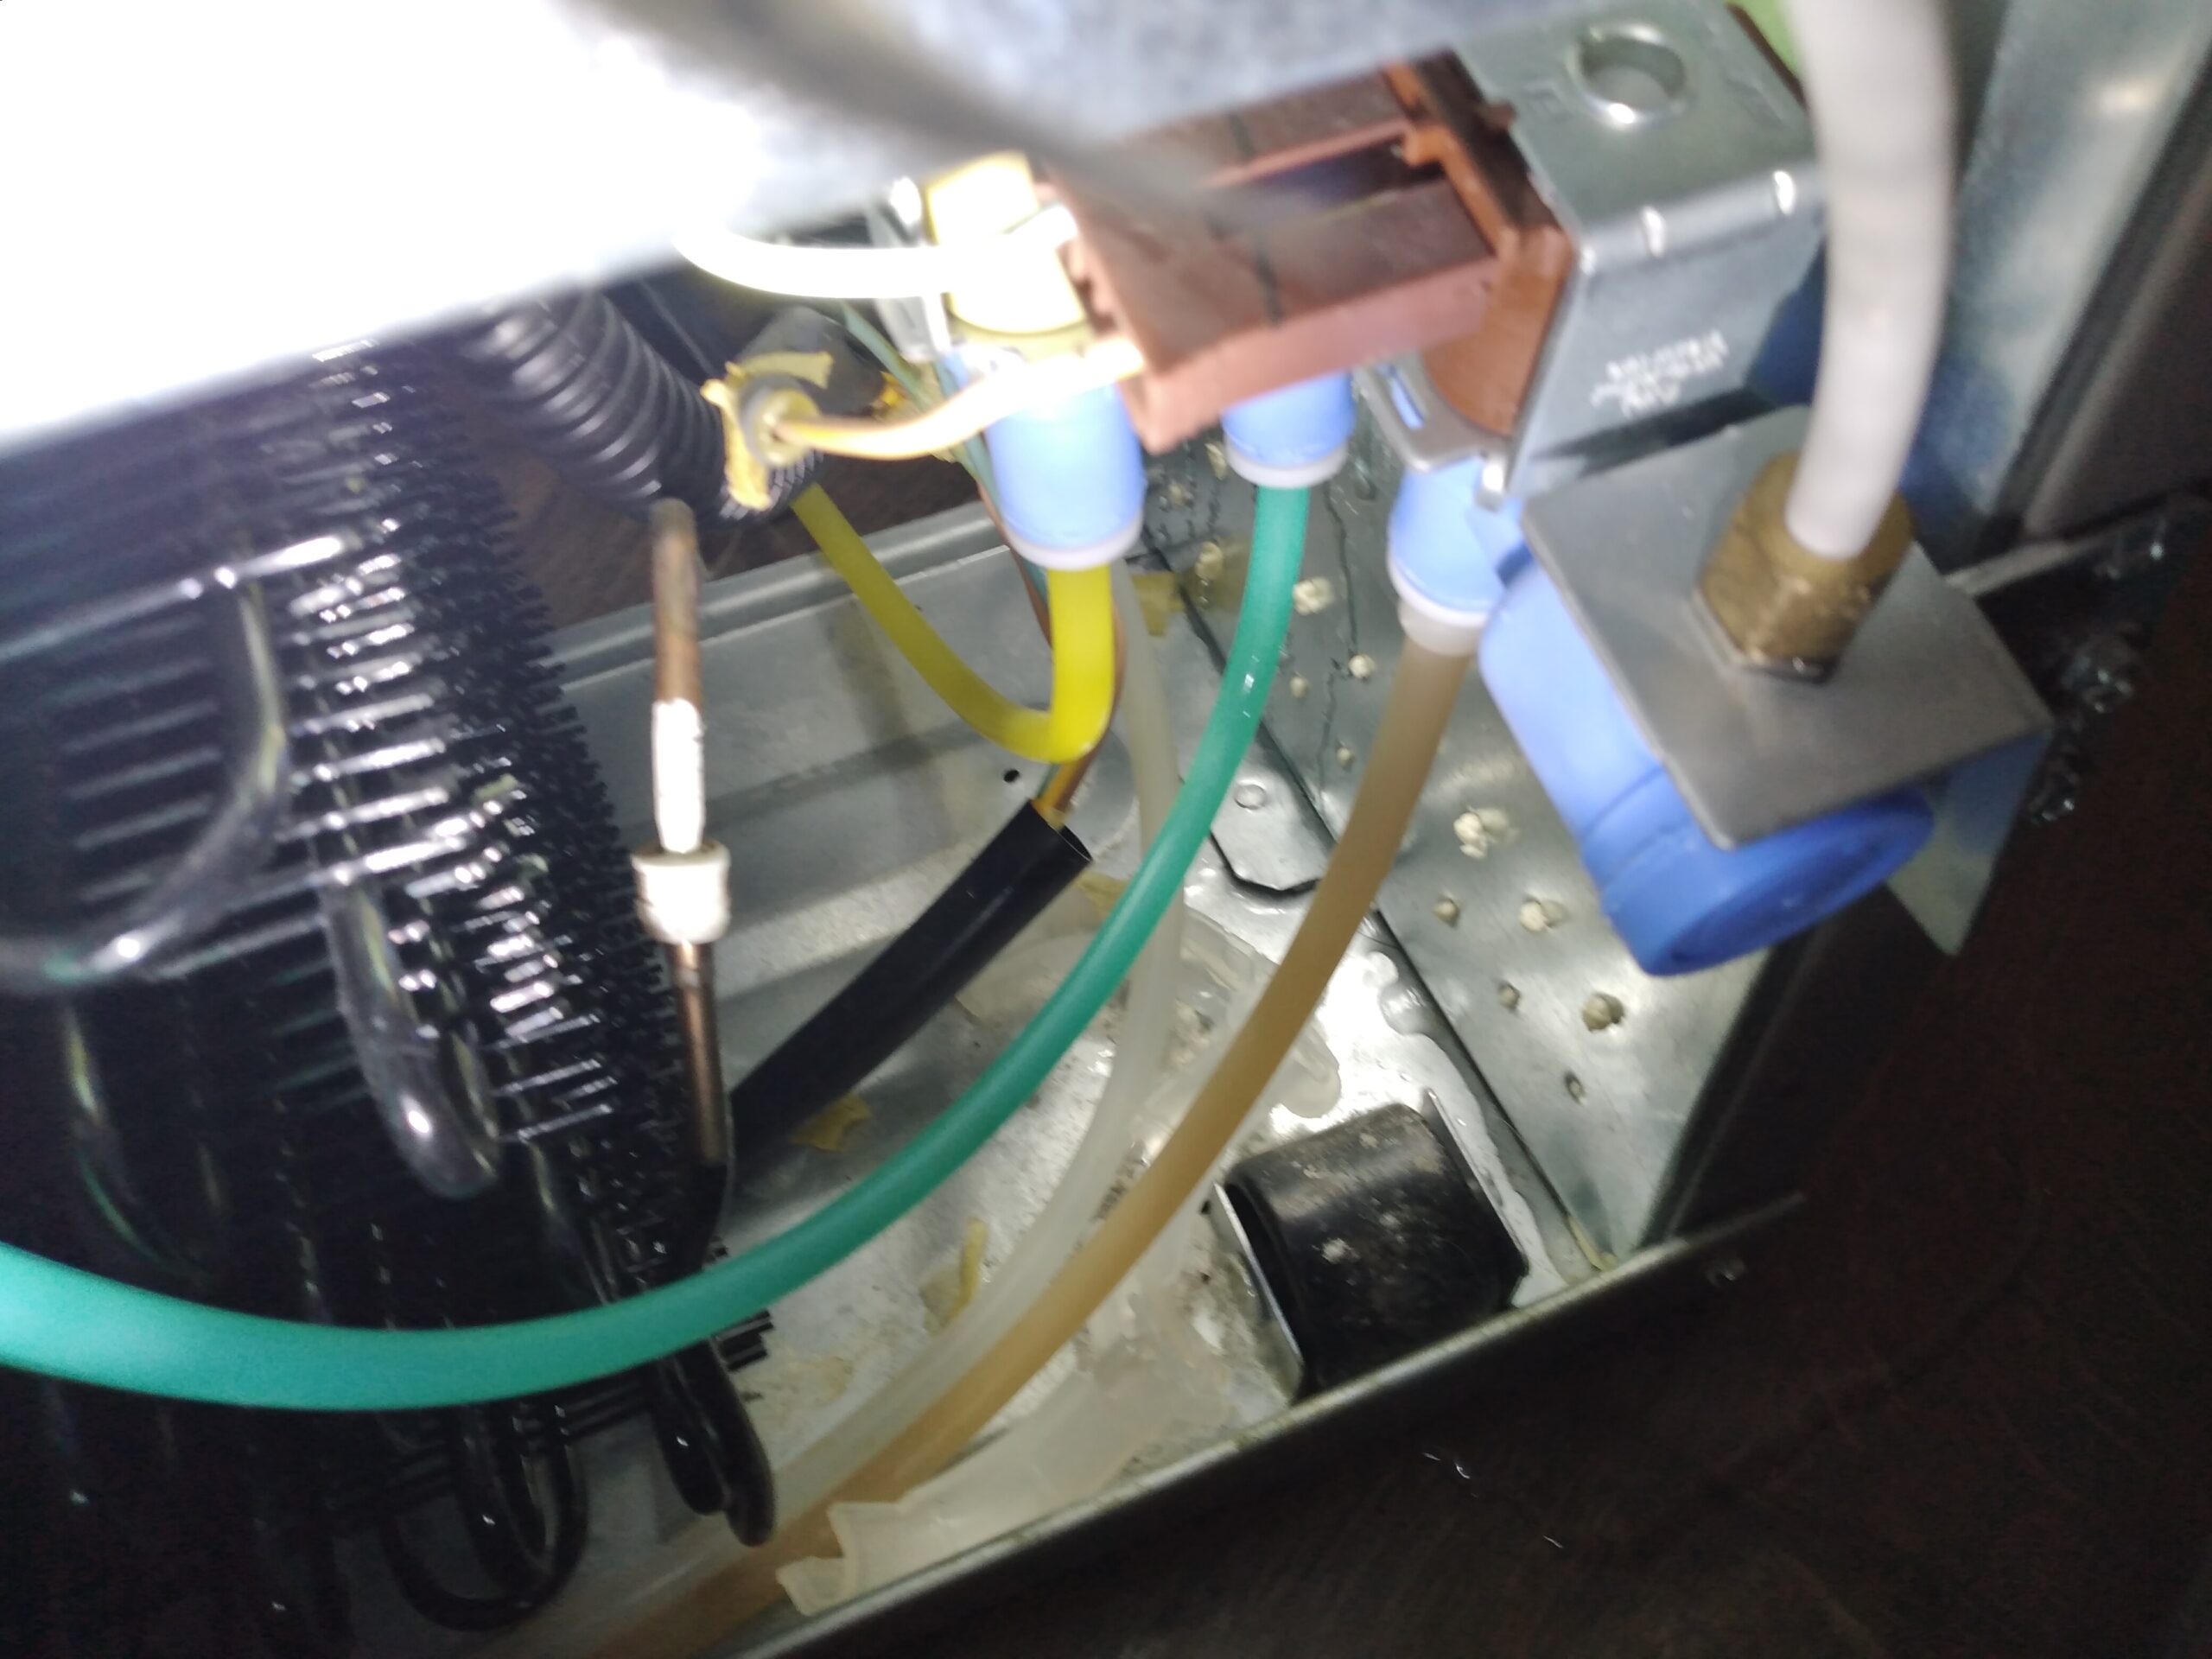 appliance repair refrigerator repair bad inlet valve causing leak n dopey dr lake buena vista orlando fl 32836